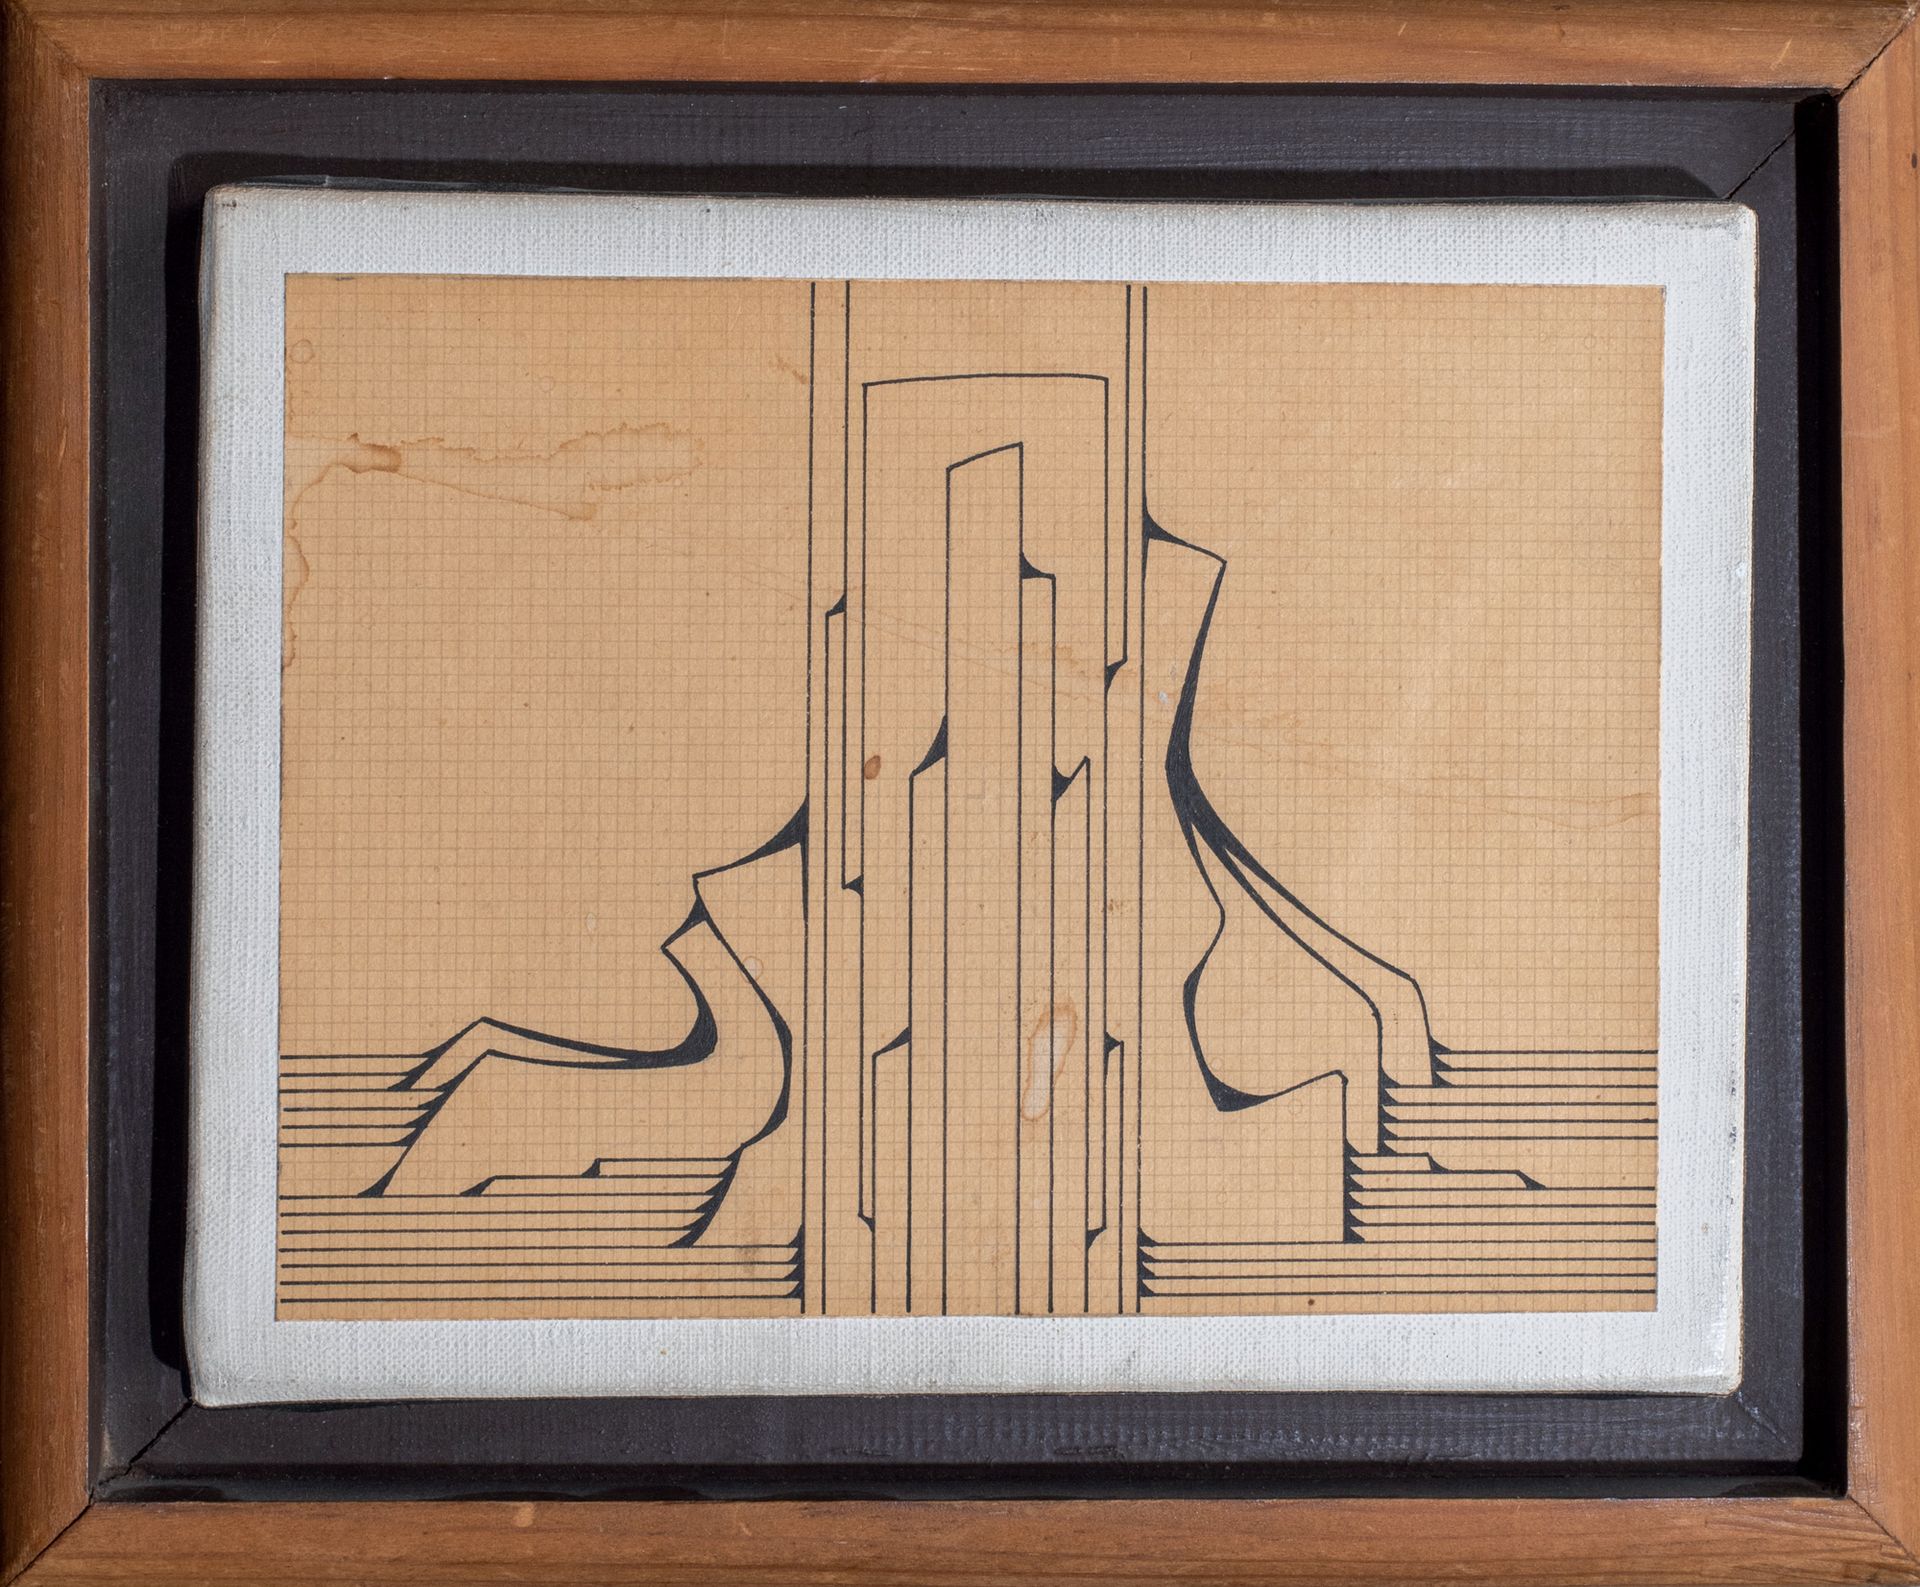 Joaquin FERRER (1929-) 
构成



纸上水墨装裱在画布上 12 x 16 cm

( 小污点)